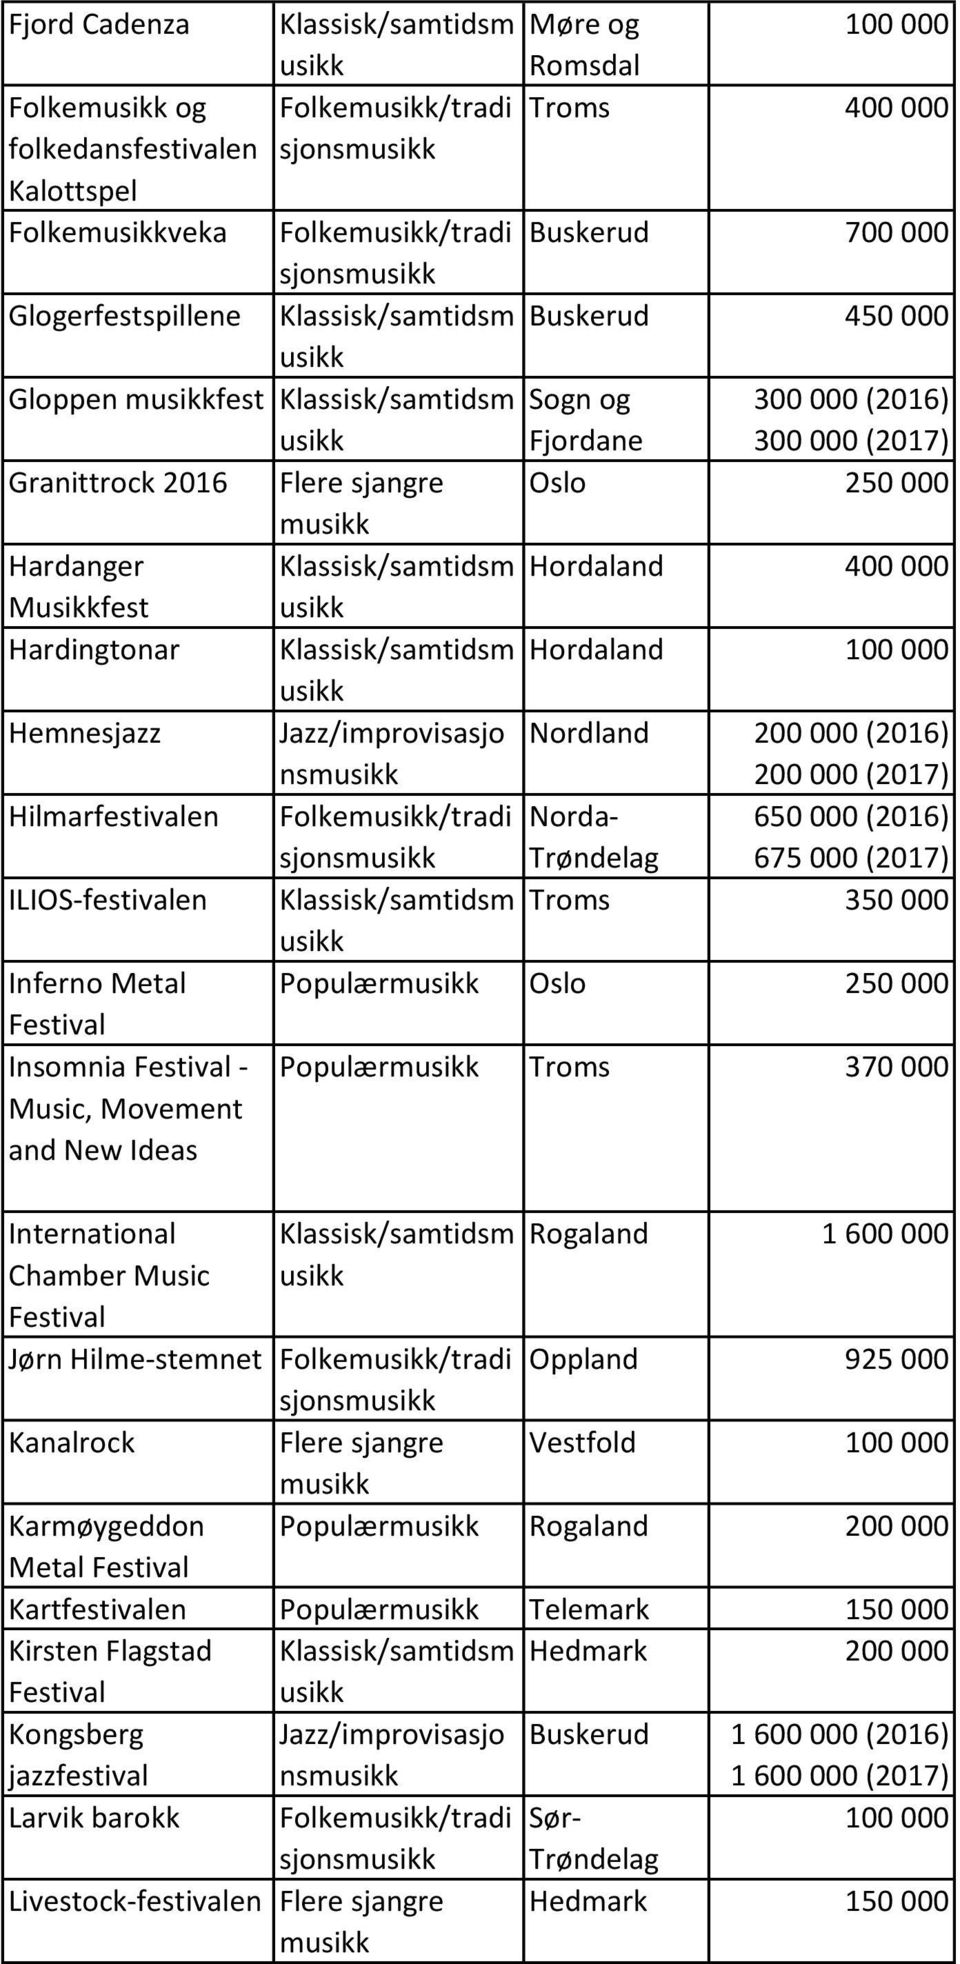 200 000 (2016) 200 000 (2017) Hilmarfestivalen Folke/tradi sjons Norda- 650 000 (2016) 675 000 (2017) ILIOS-festivalen Troms 350 000 Inferno Metal Populær Oslo 250 000 Insomnia - Music, Movement and